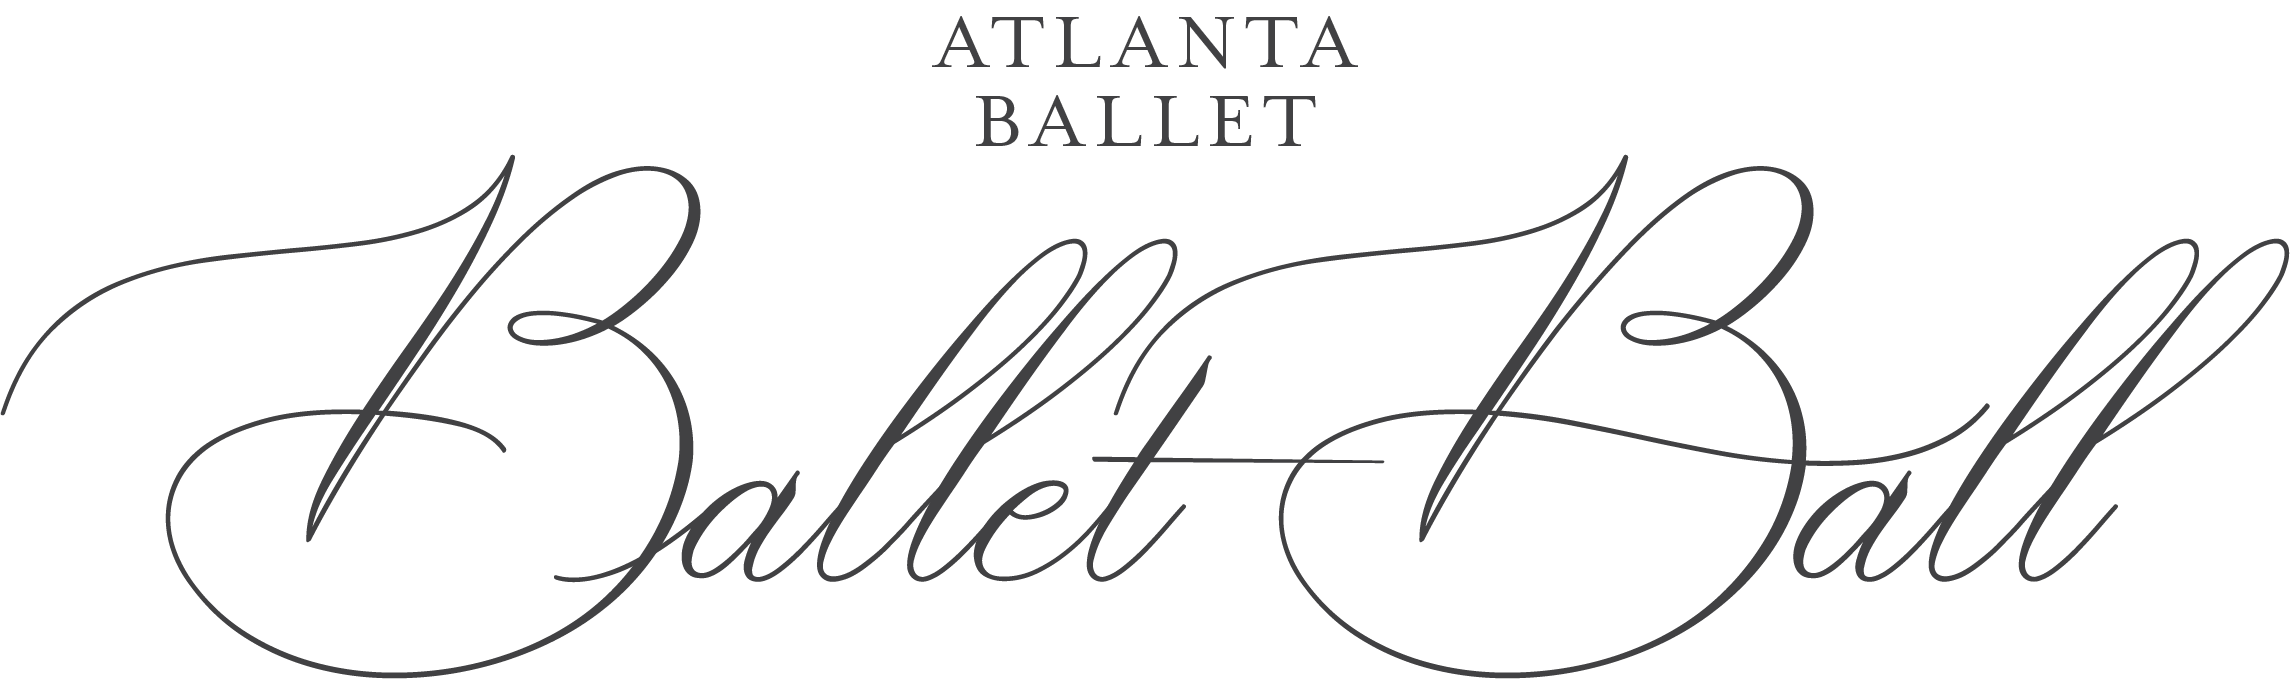 2020_BalletBall_Logo_dark-grey_no-date_RGB.png?mtime=20191206185609#asset:5709